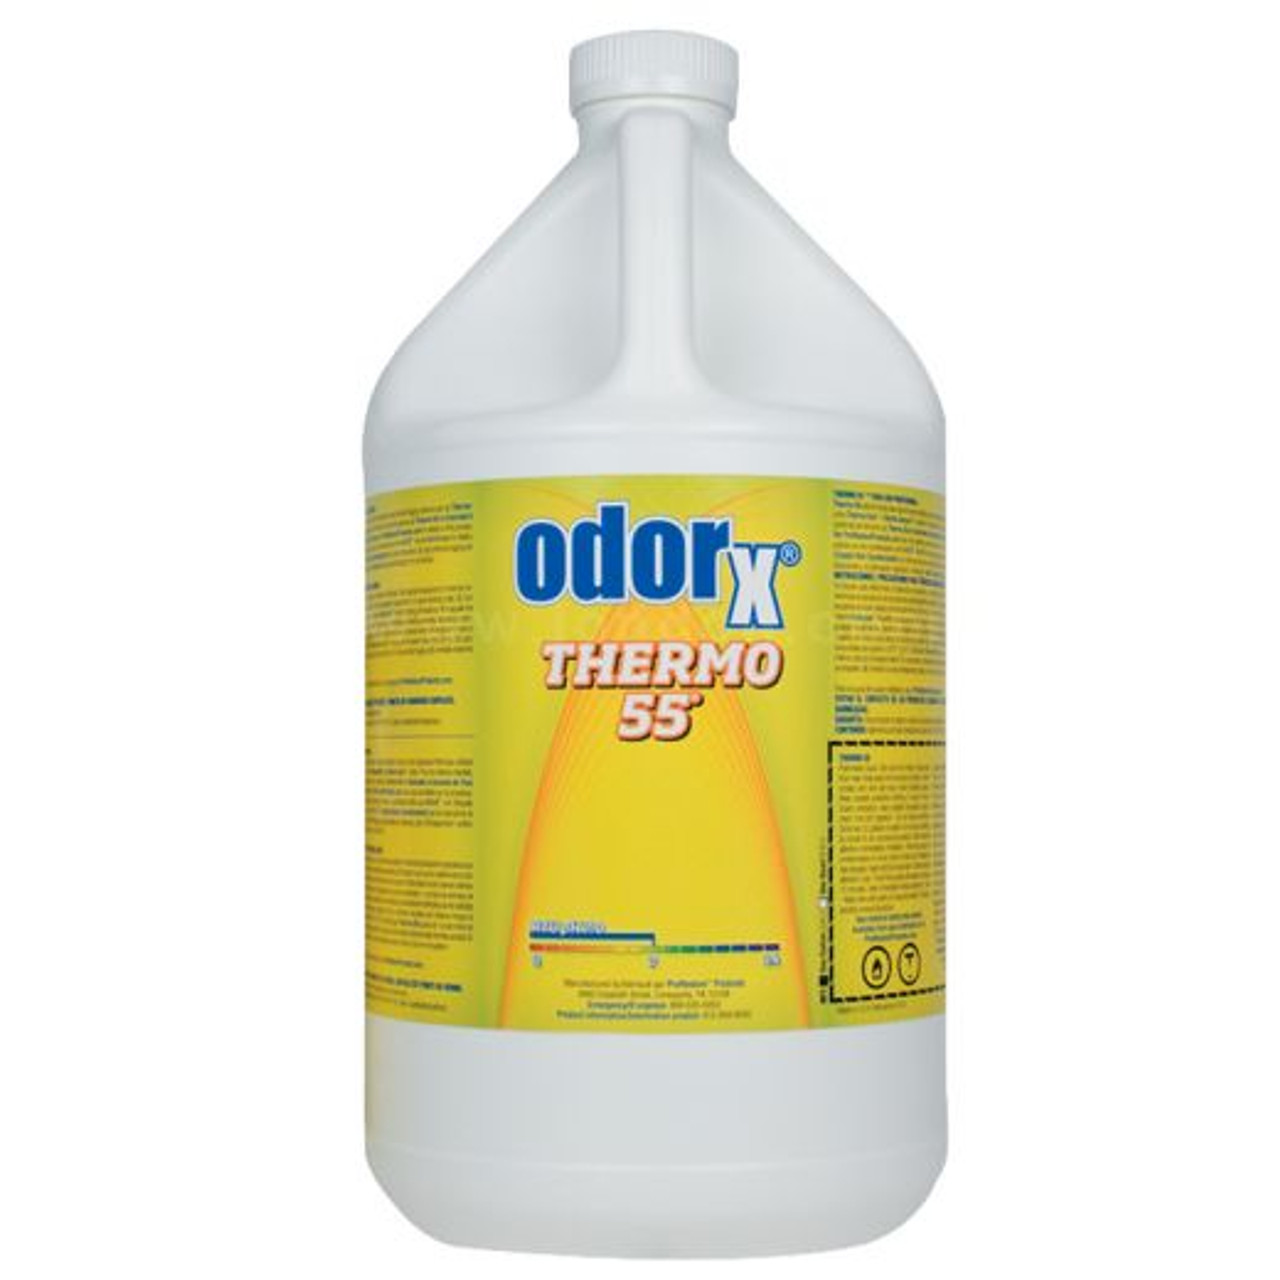 ODORX Thermo 55 Tabac Attack